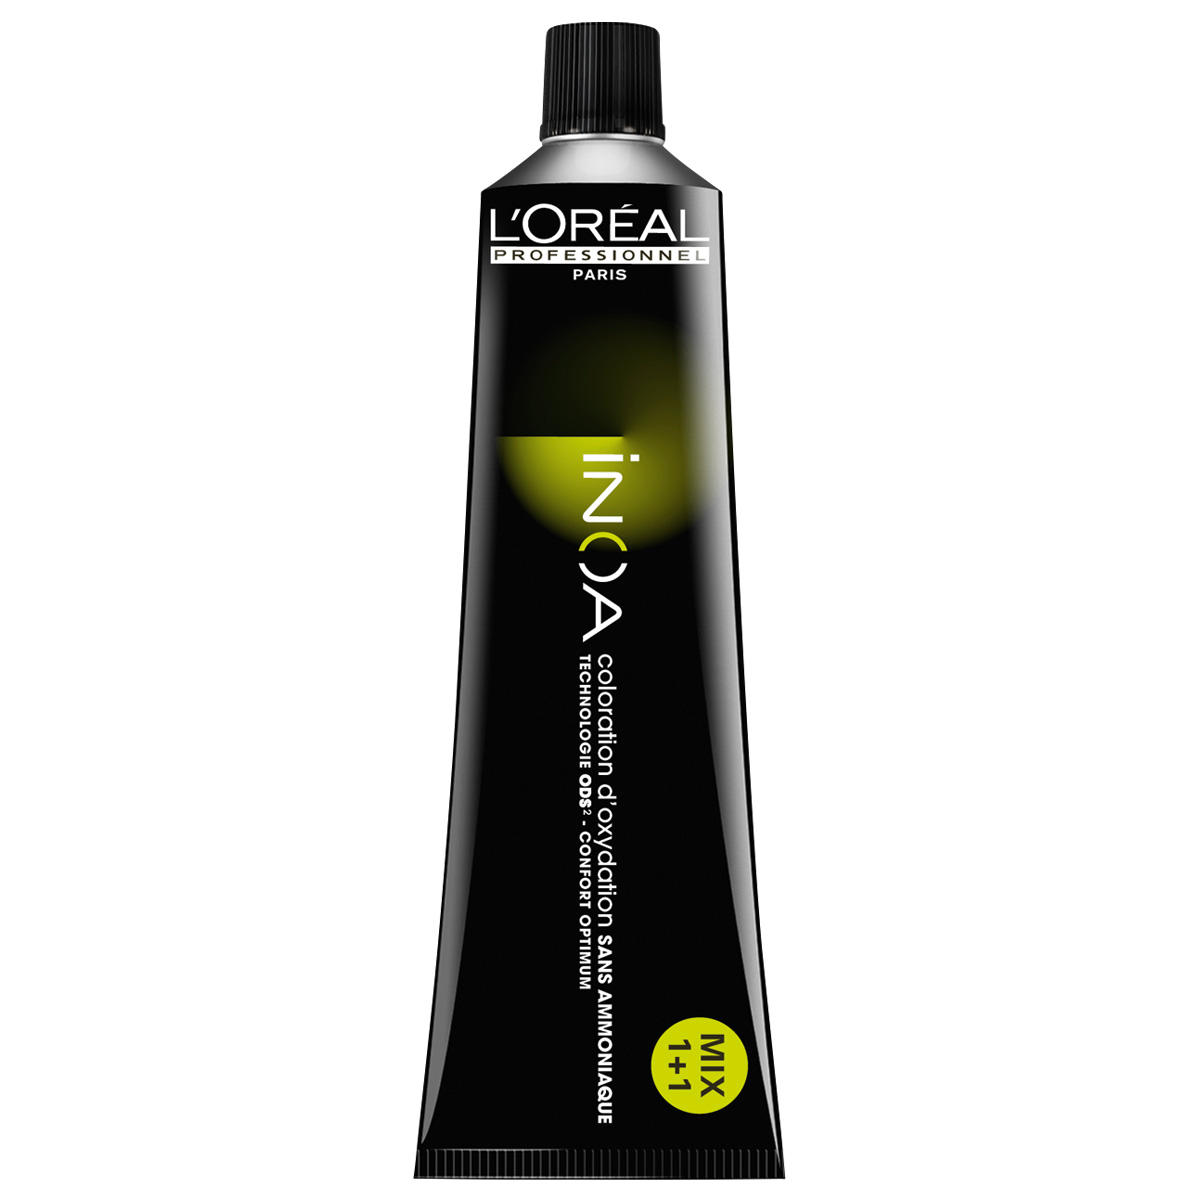 L'Oréal Professionnel Paris Coloration 8 Rubio claro, tubo 60 ml